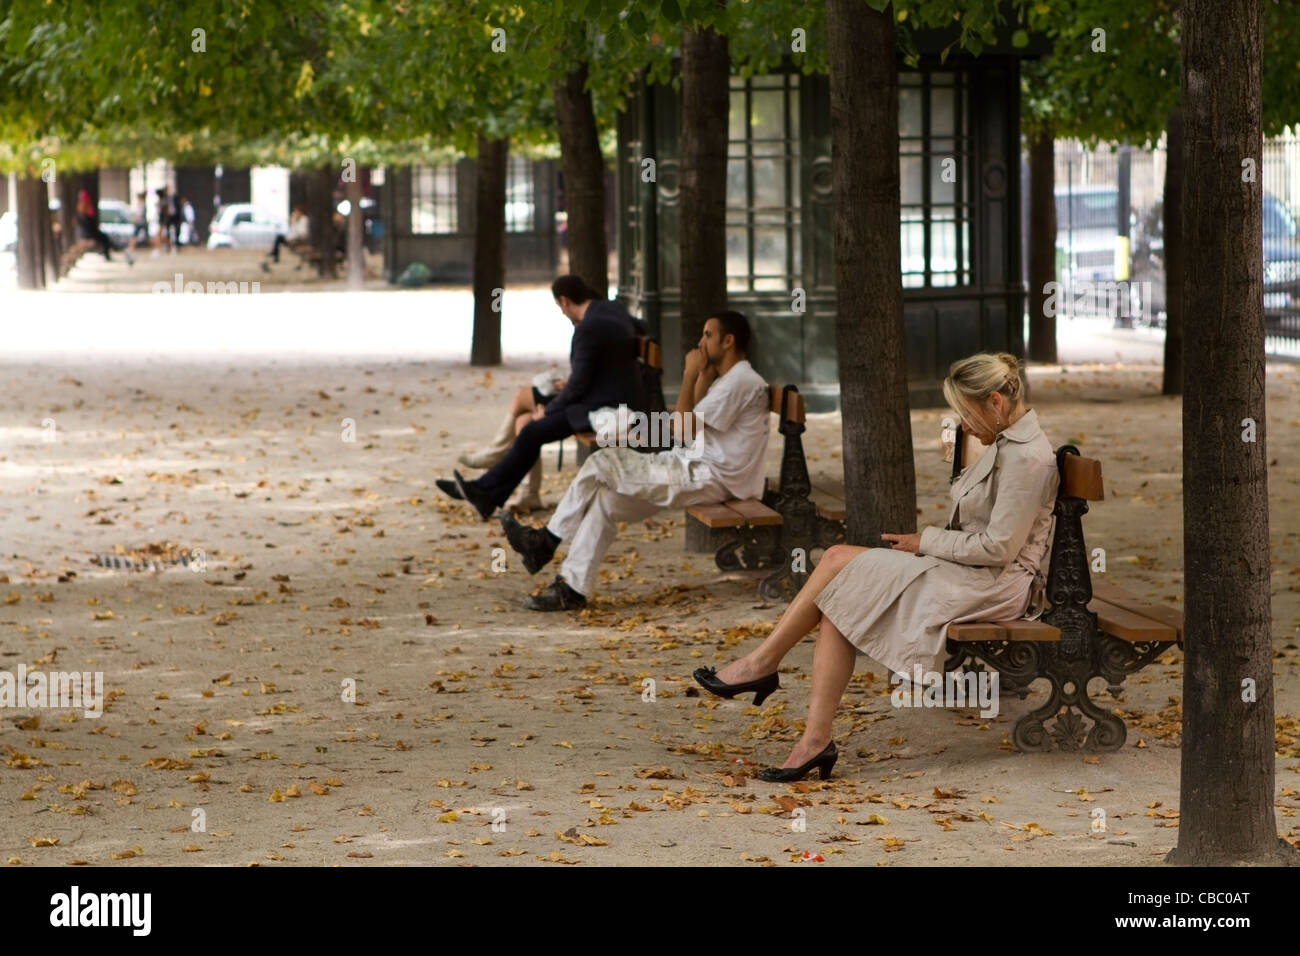 Locals relaxing in Place des Vosges, Paris, France Stock Photo